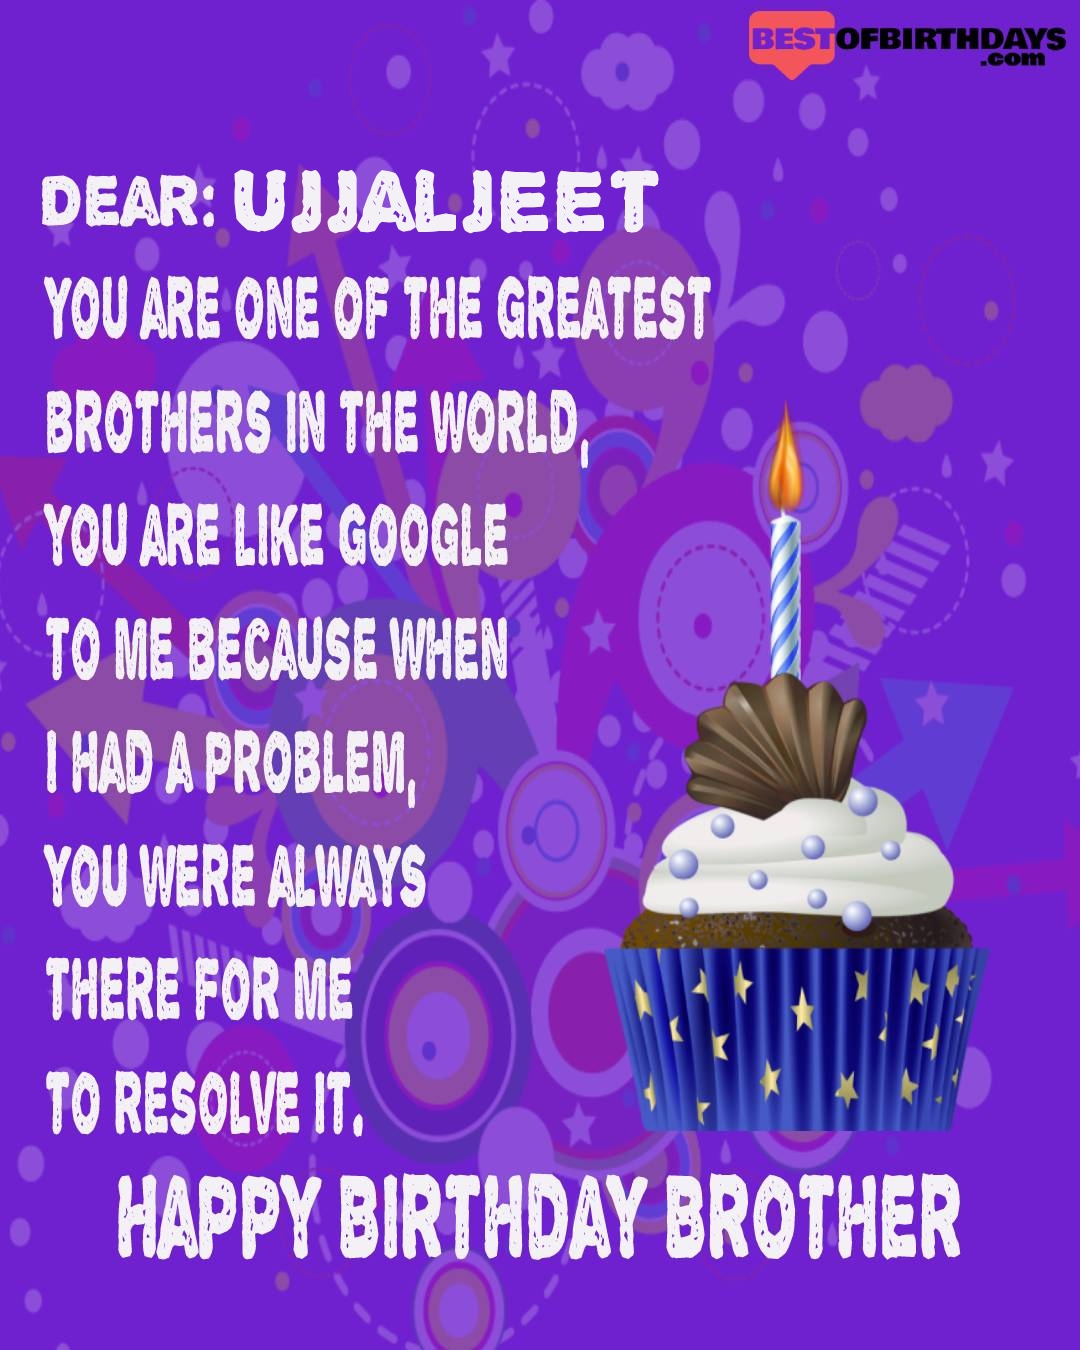 Happy birthday ujjaljeet bhai brother bro